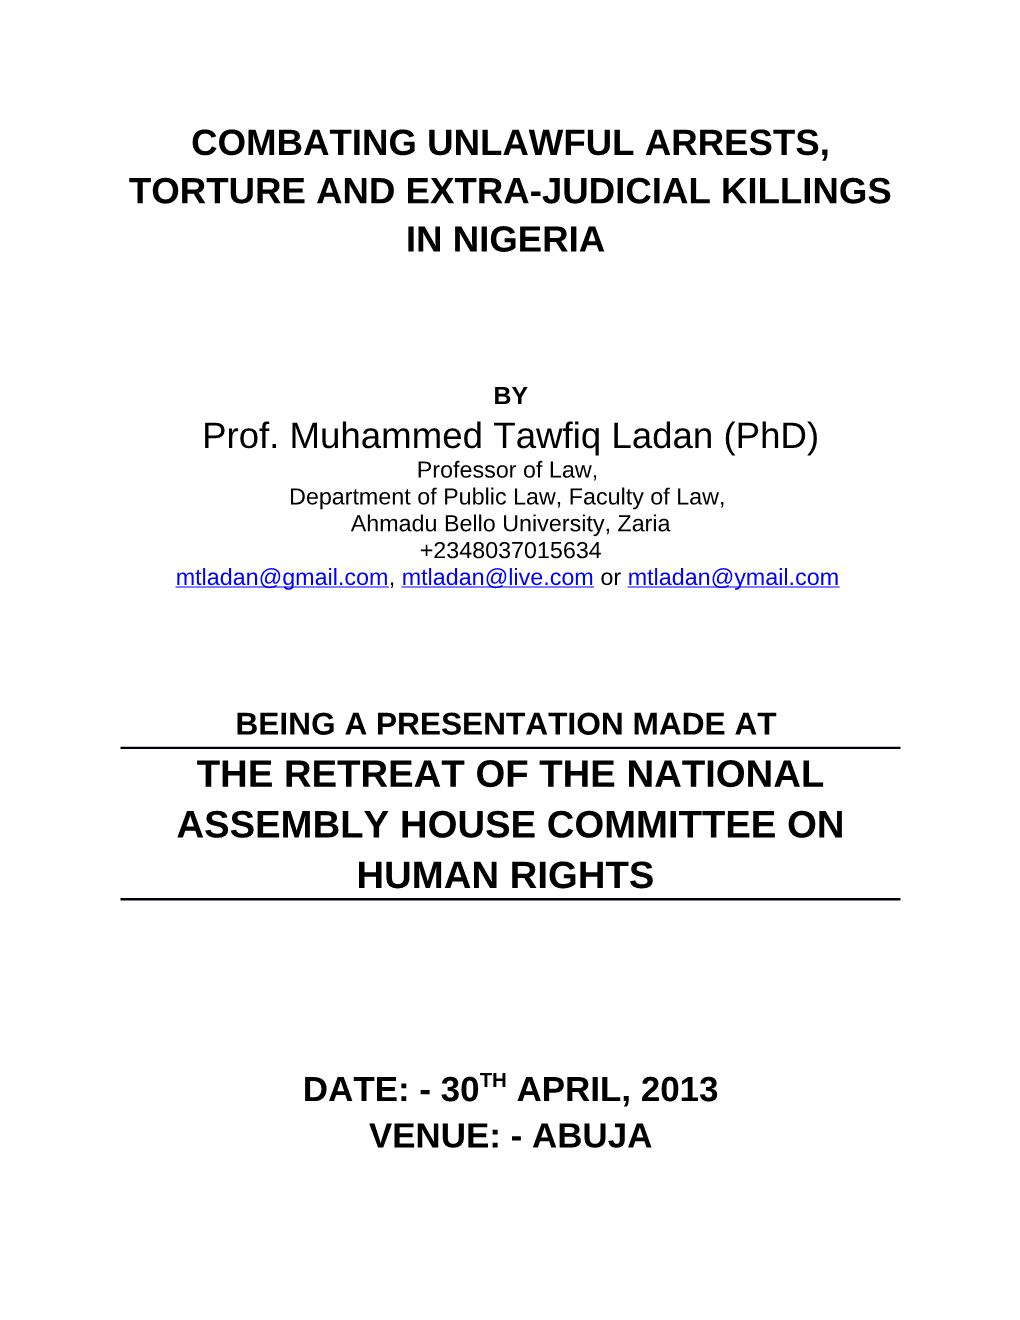 Combating Unlawful Arrests, Torture and Extra-Judicial Killings in Nigeria